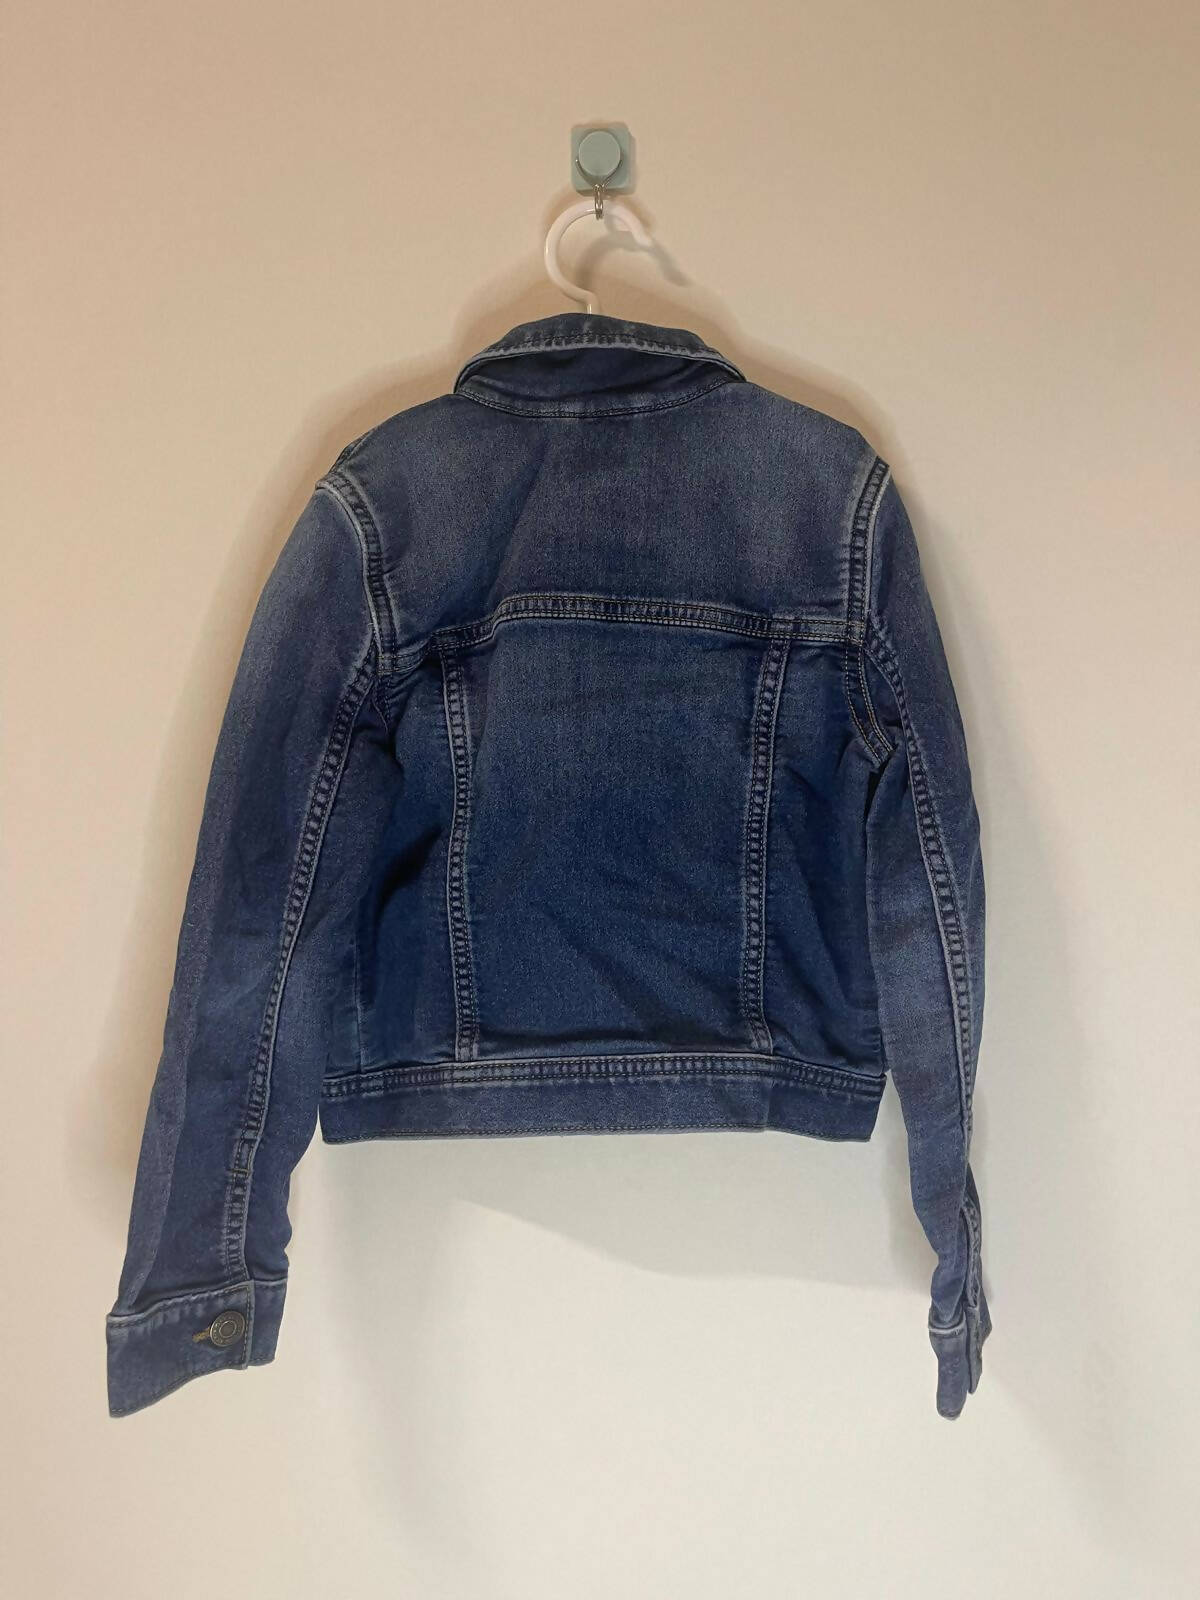 Gap kids | Blue denim jacket (size 6-8) | Girls Tops & Shirts | Brand New